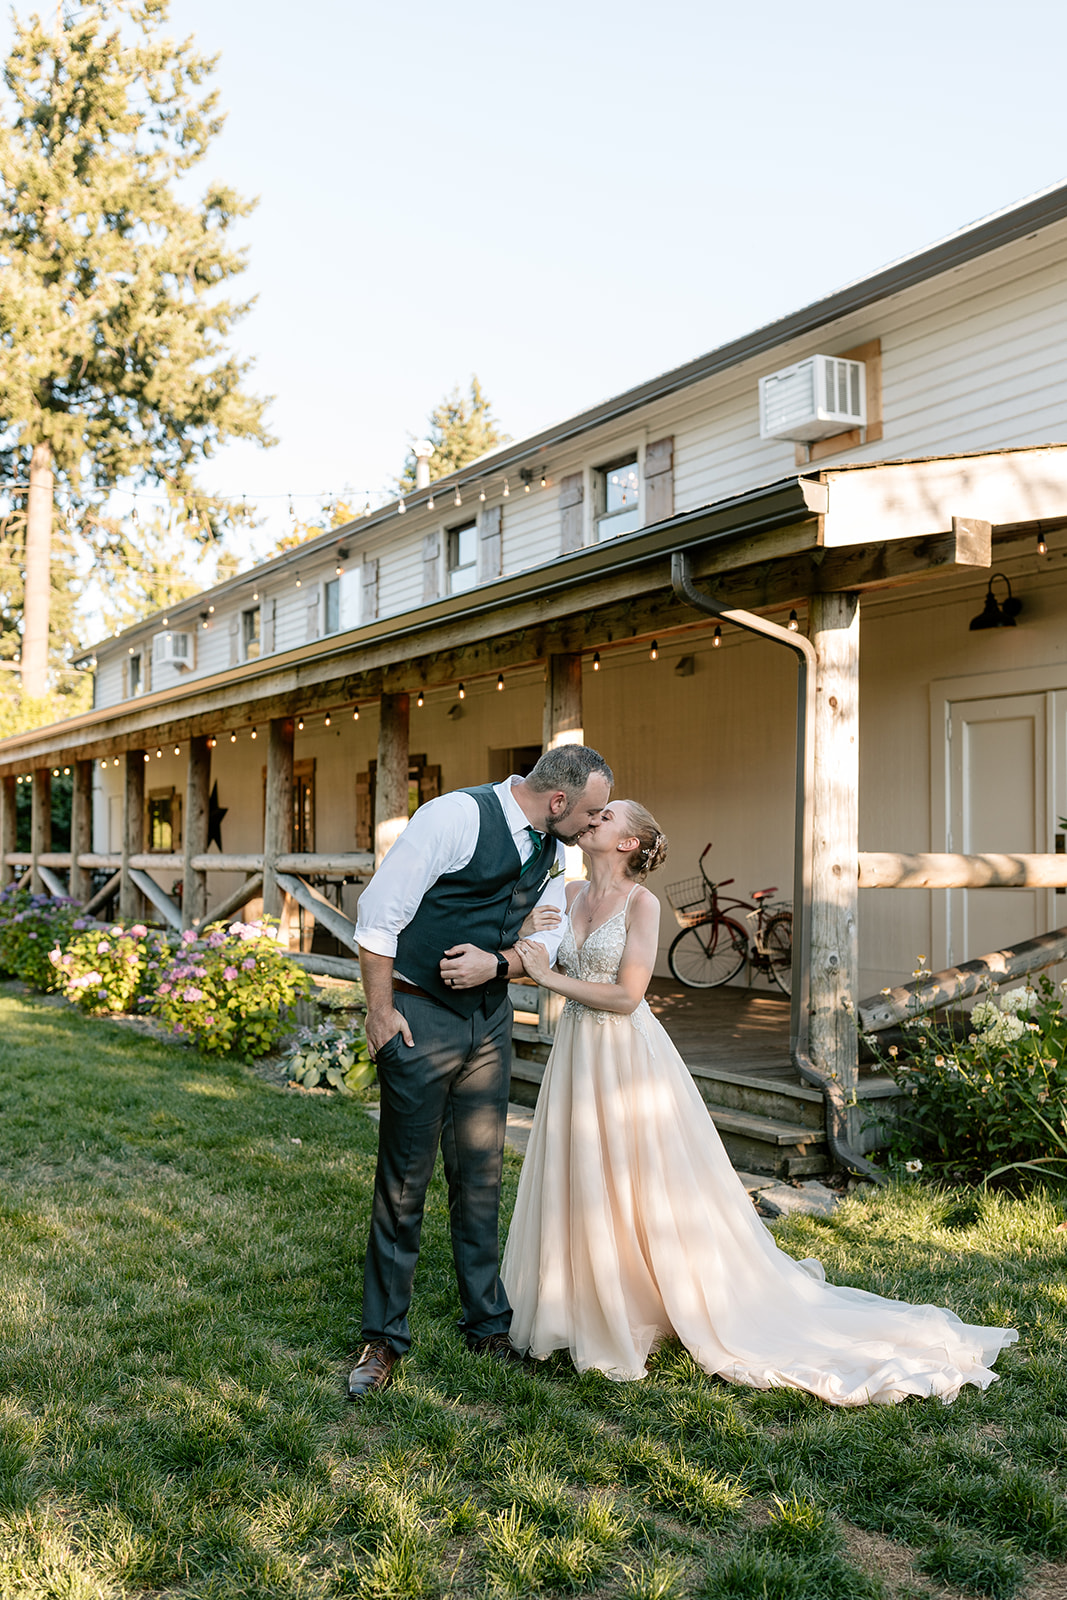 copper gables barn wedding roy washington state photographer couples poses wedding venue ideas photoshoot ideas